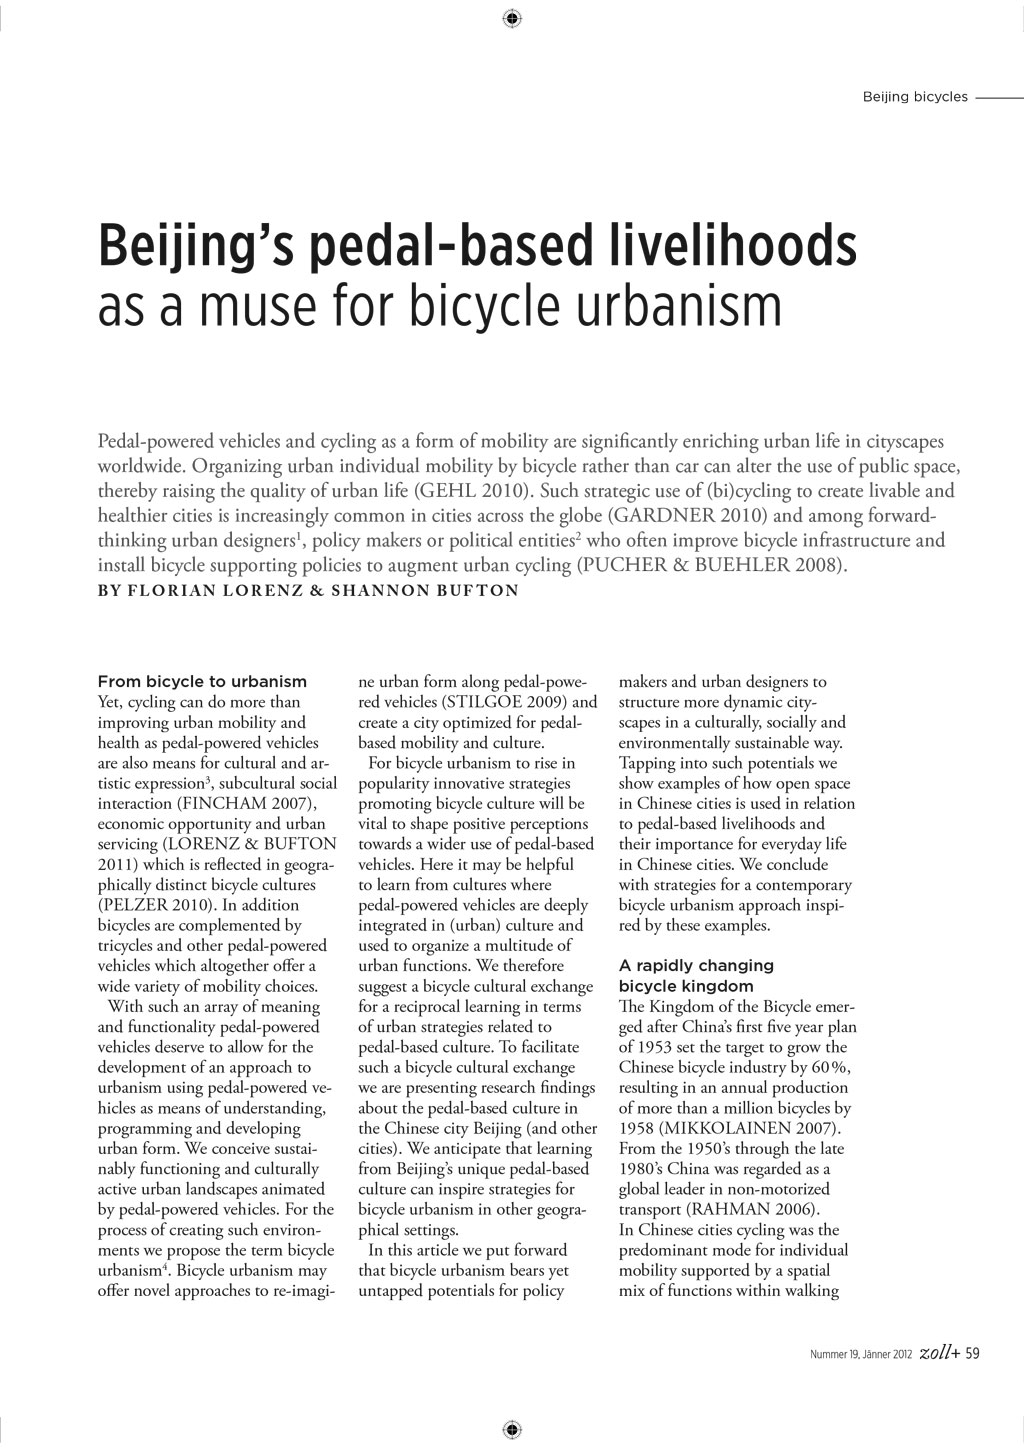 TN_zoll_no19_vol59_2012_urban_Lorenz+Bufton_Beijing-Bicycle-Urbanism-1